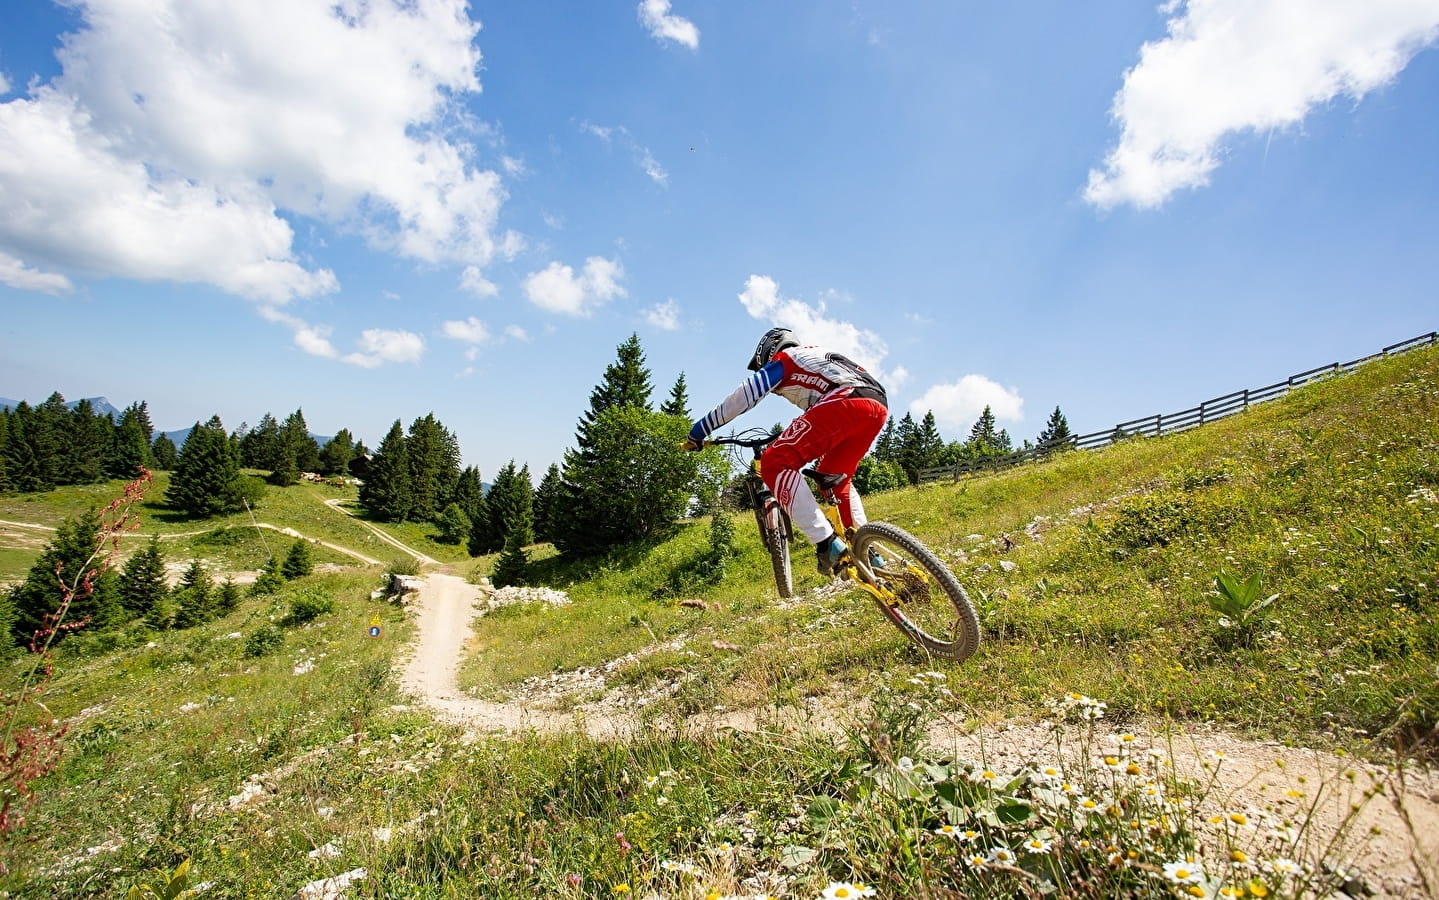 Mountain biking in Métabief, THE resort of the Jura Mountains